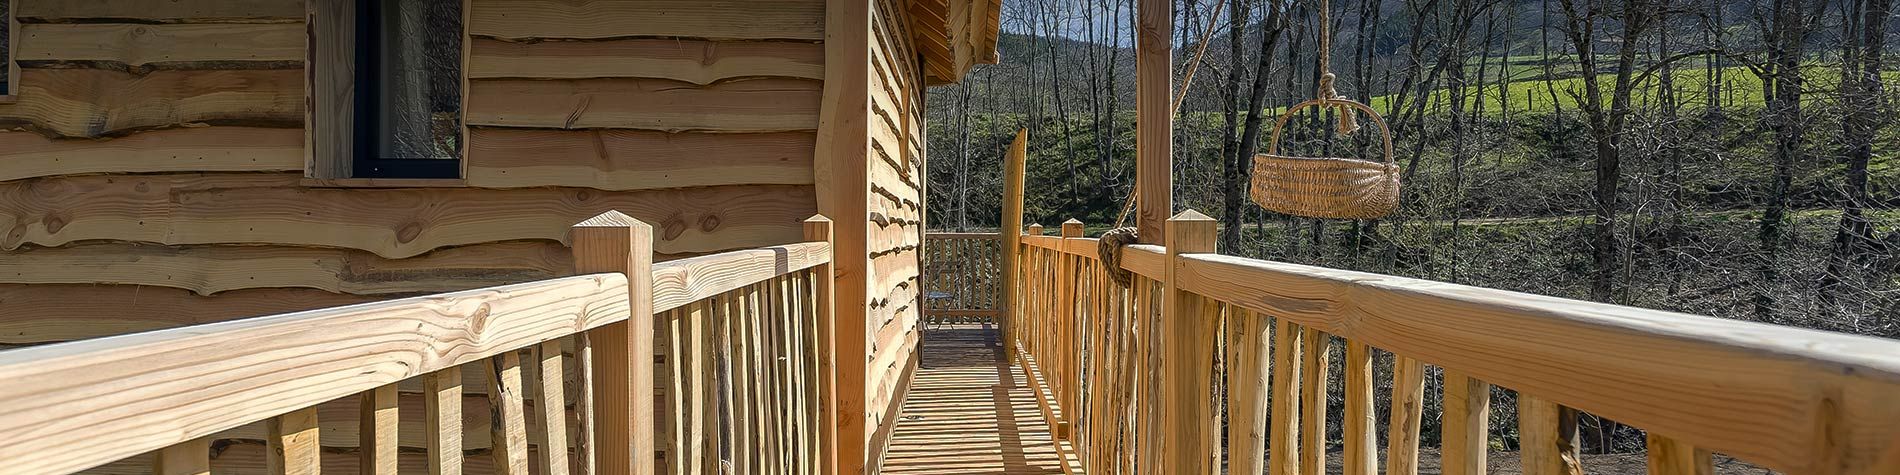 access bridge to the hut